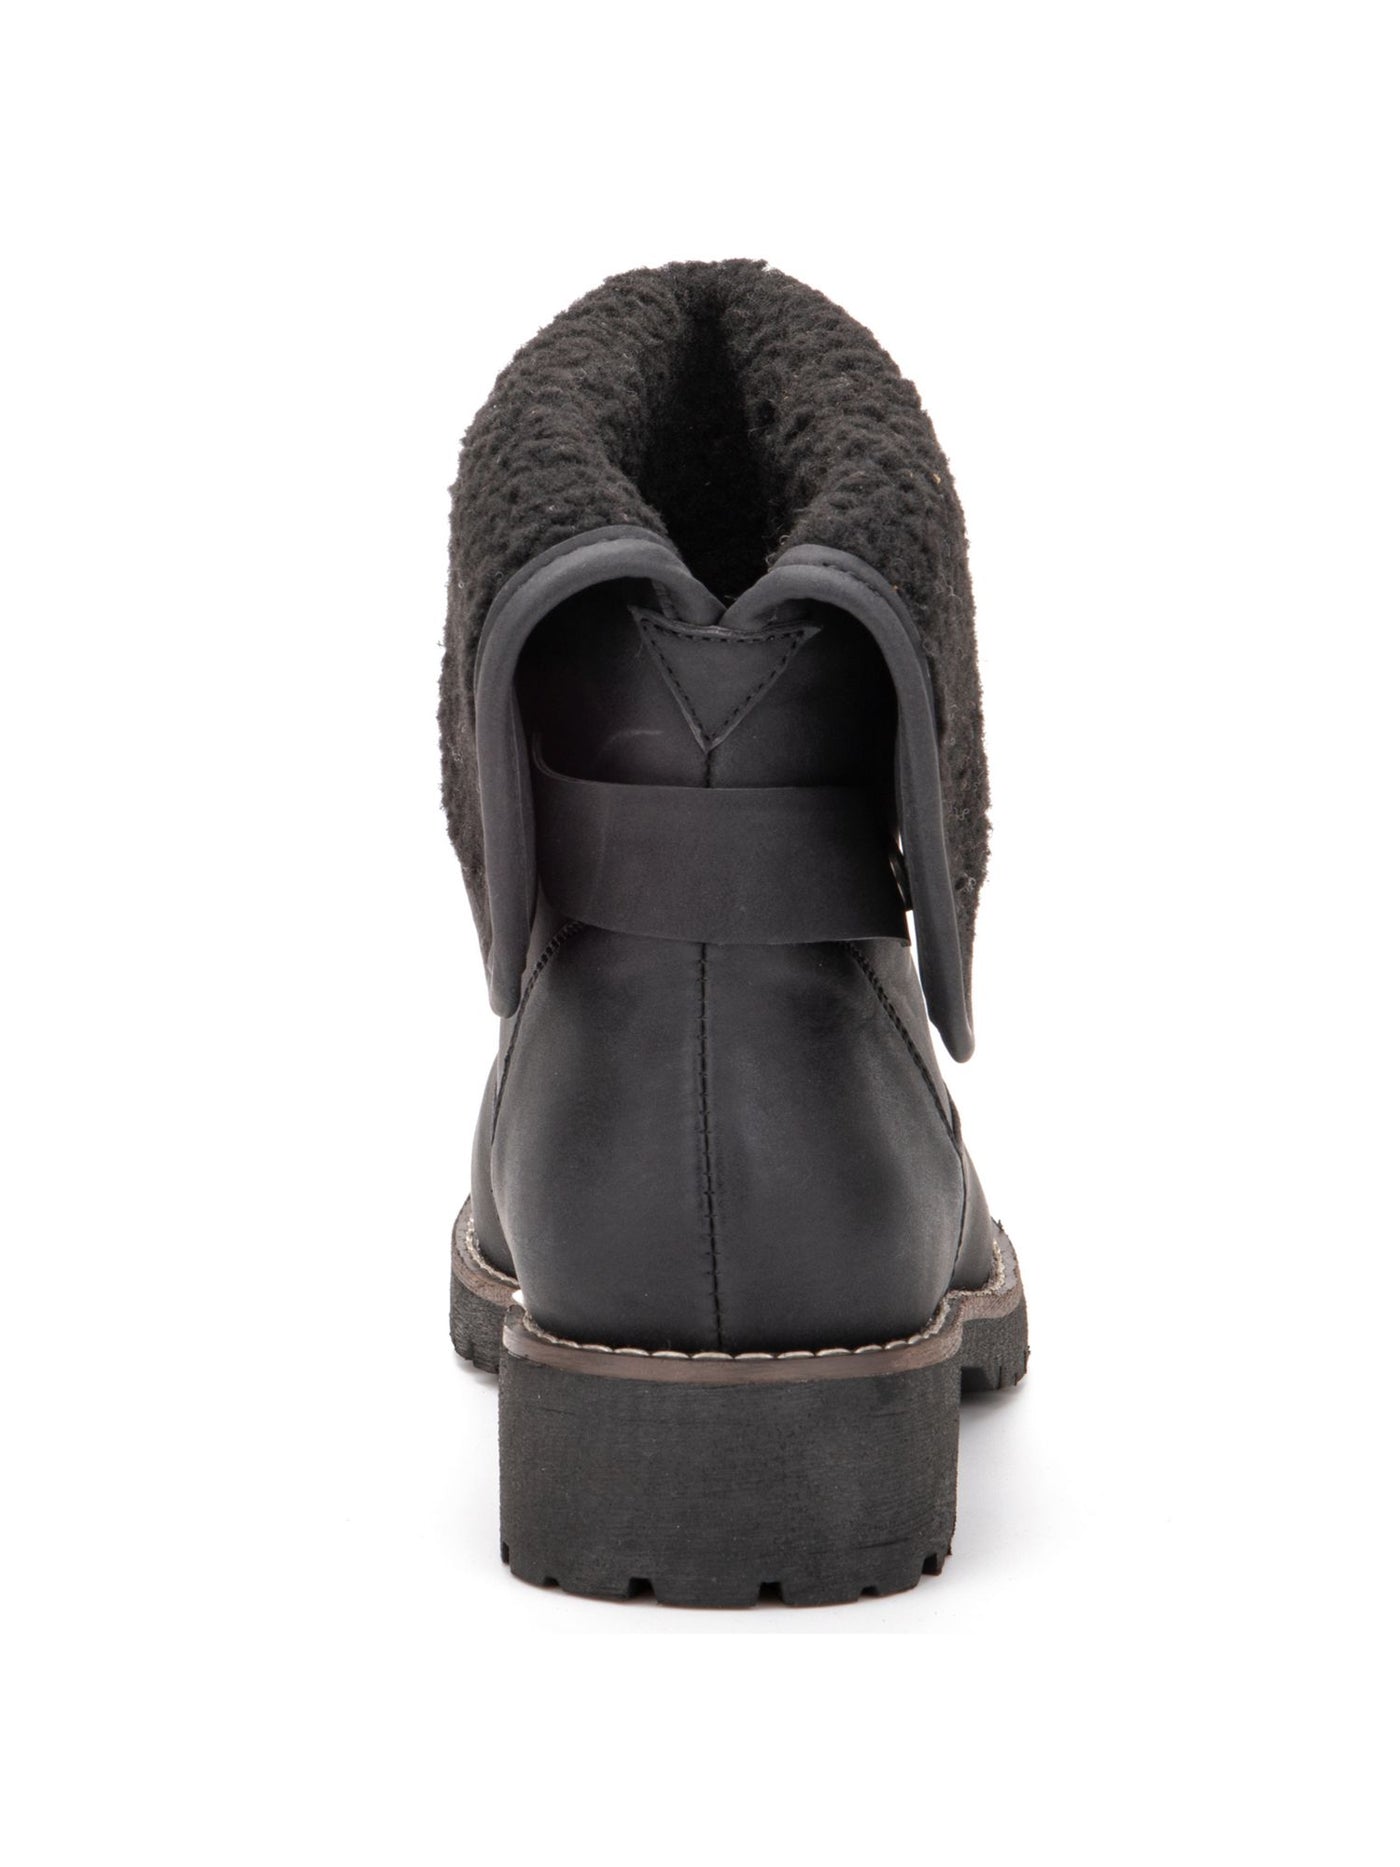 OLIVIA MILLER Womens Black Comfort Cozy Me Up Round Toe Block Heel Slip On Boots Shoes 9